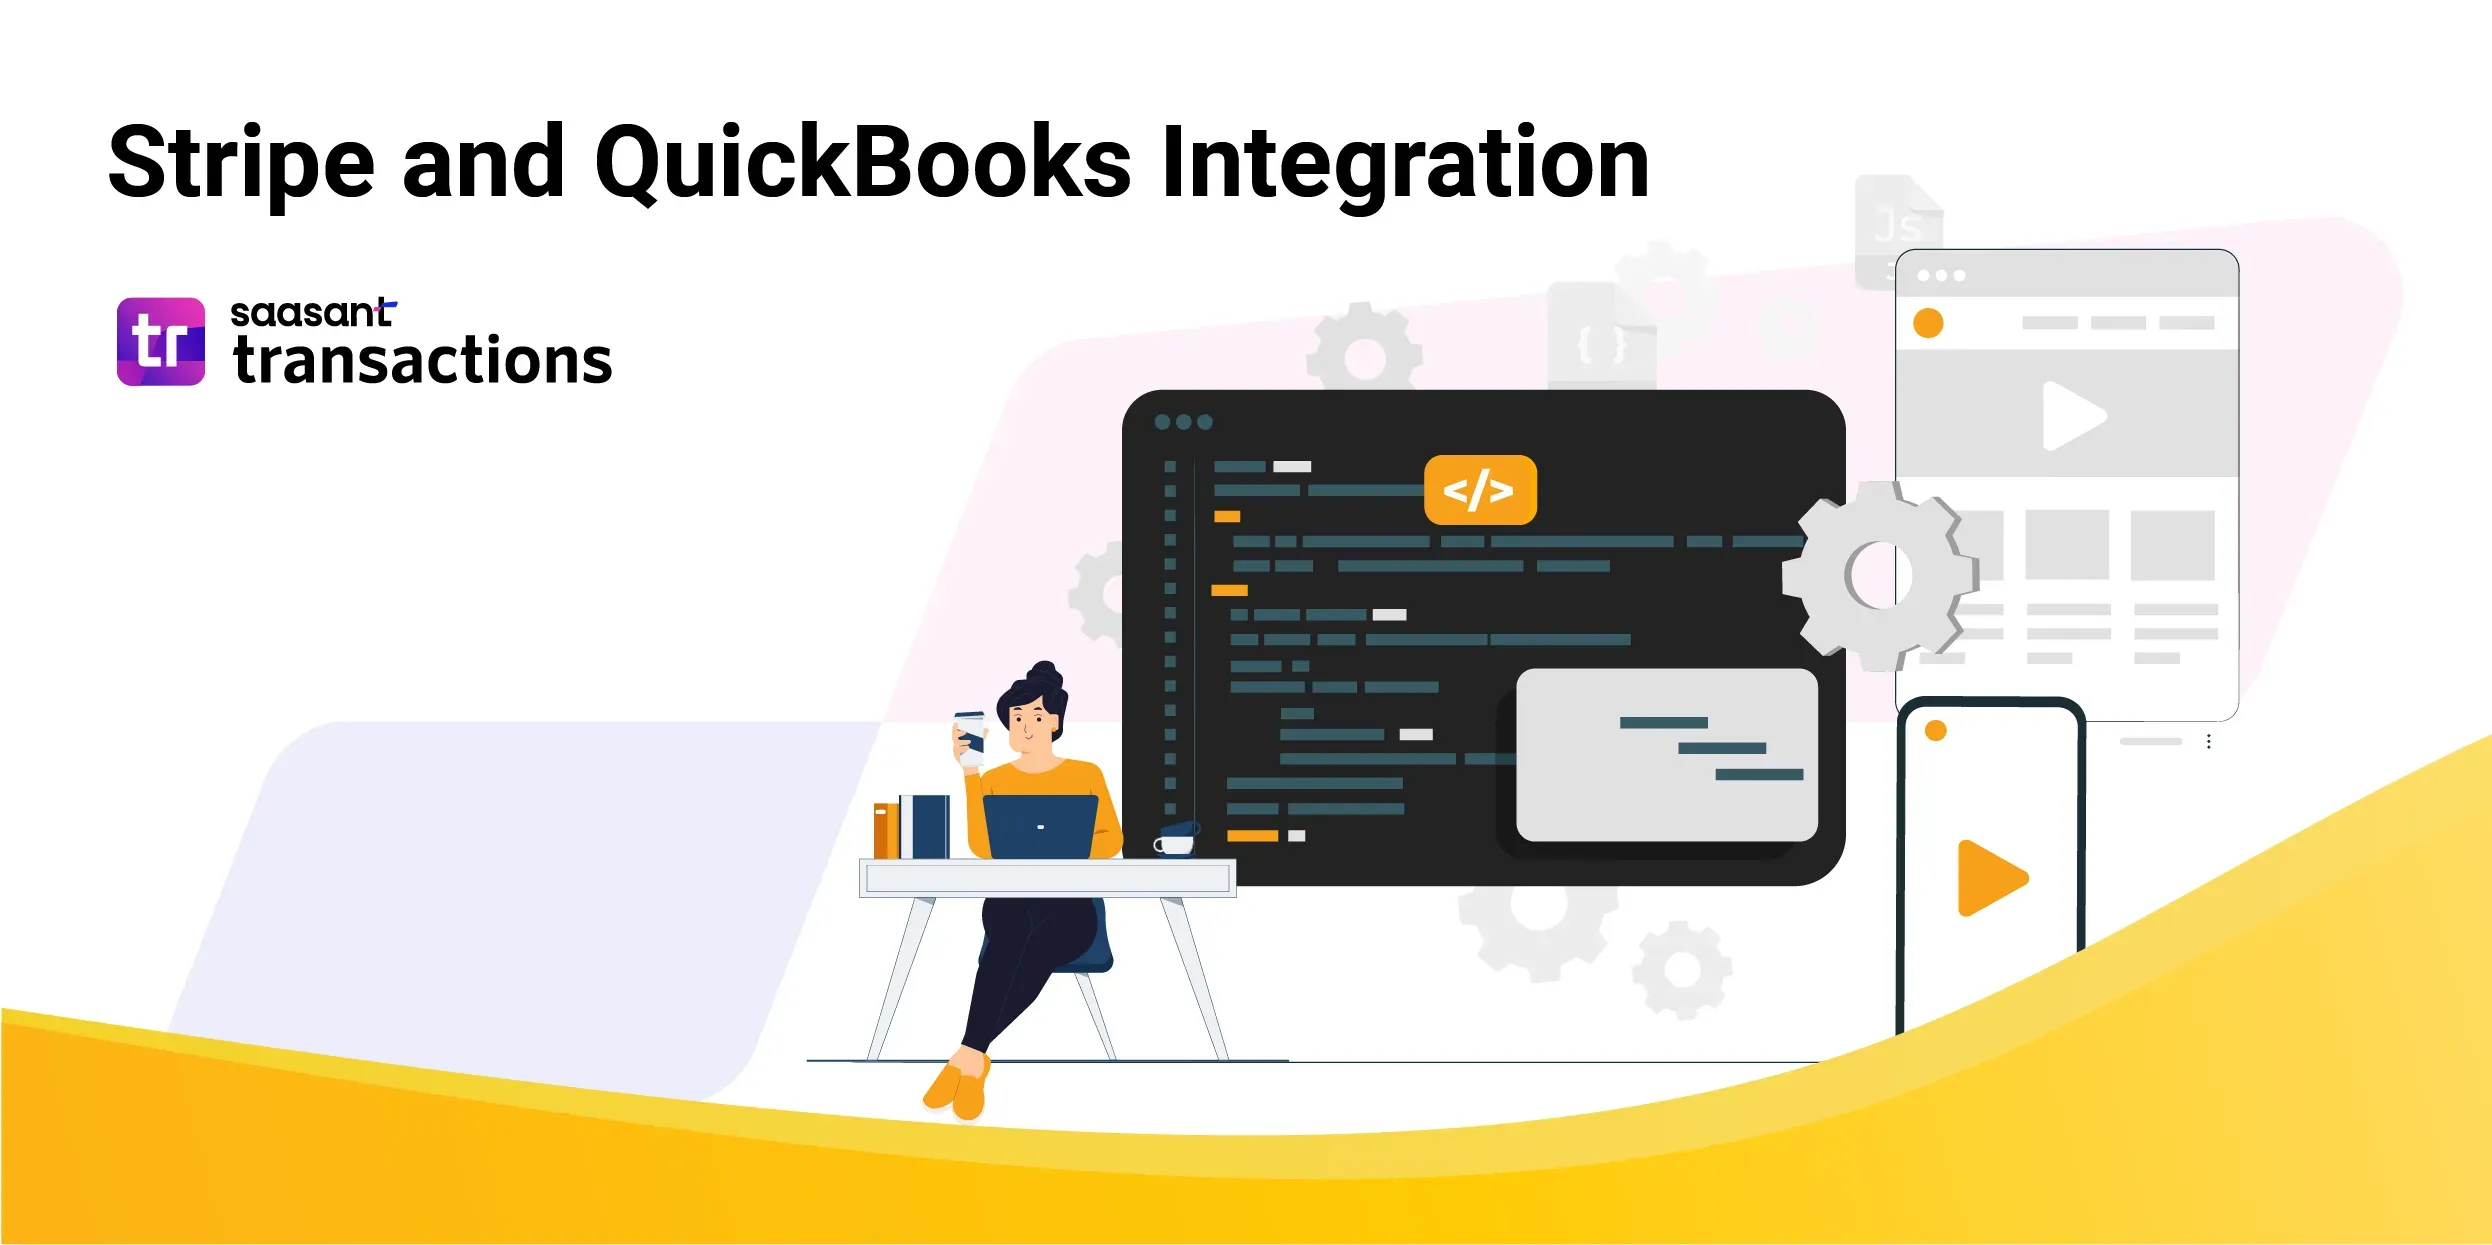 Stripe and QuickBooks Integration